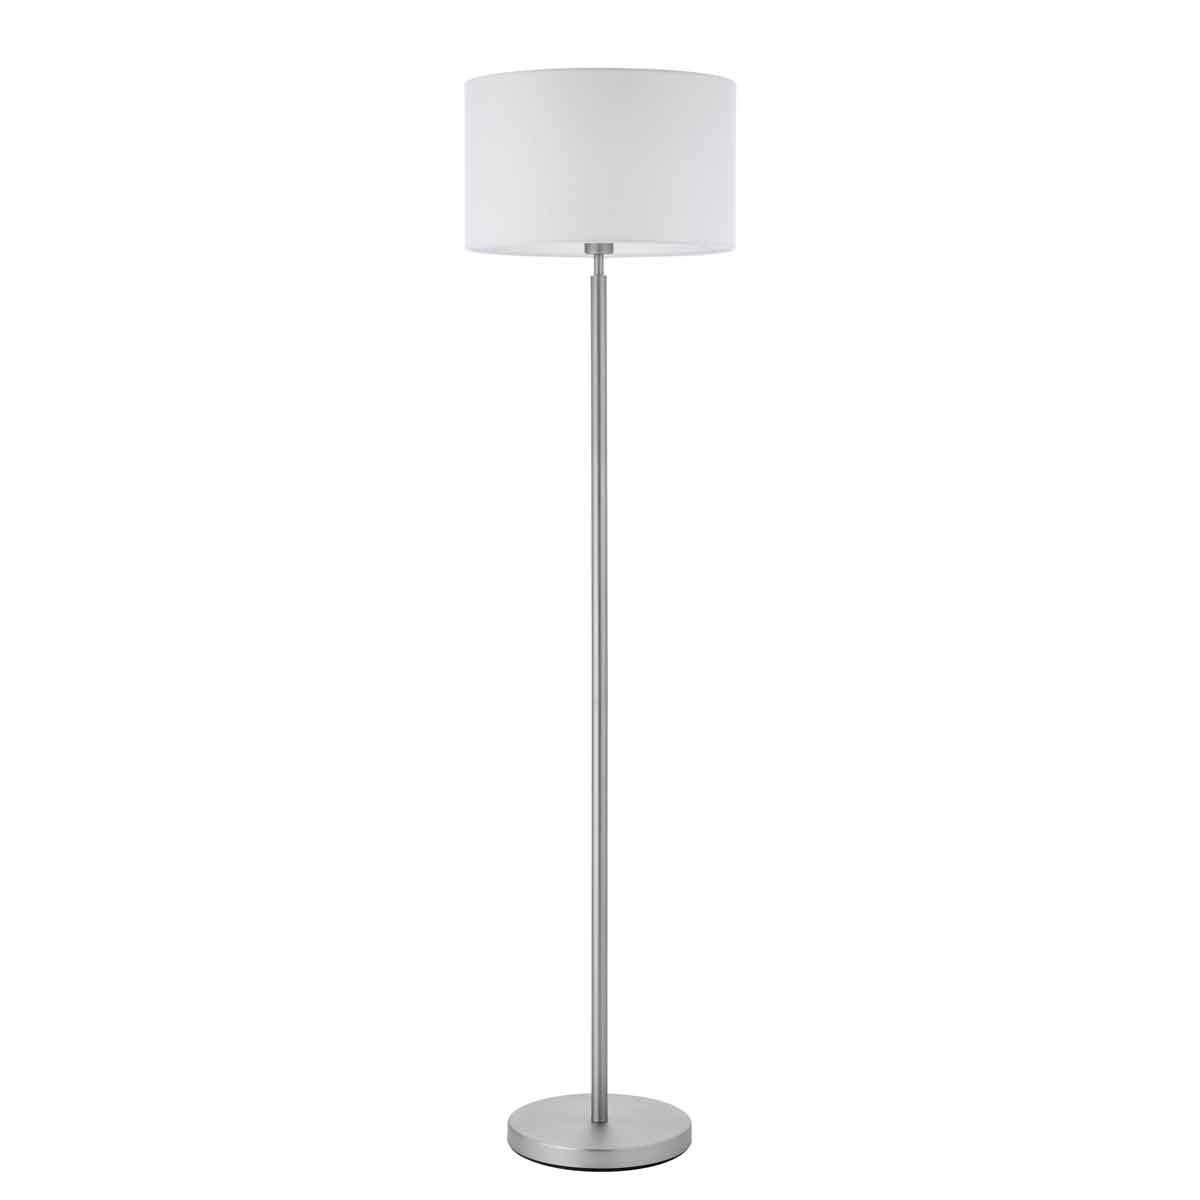 Crossland Grove Hart Rectangular Floor Lamp Nickel/White